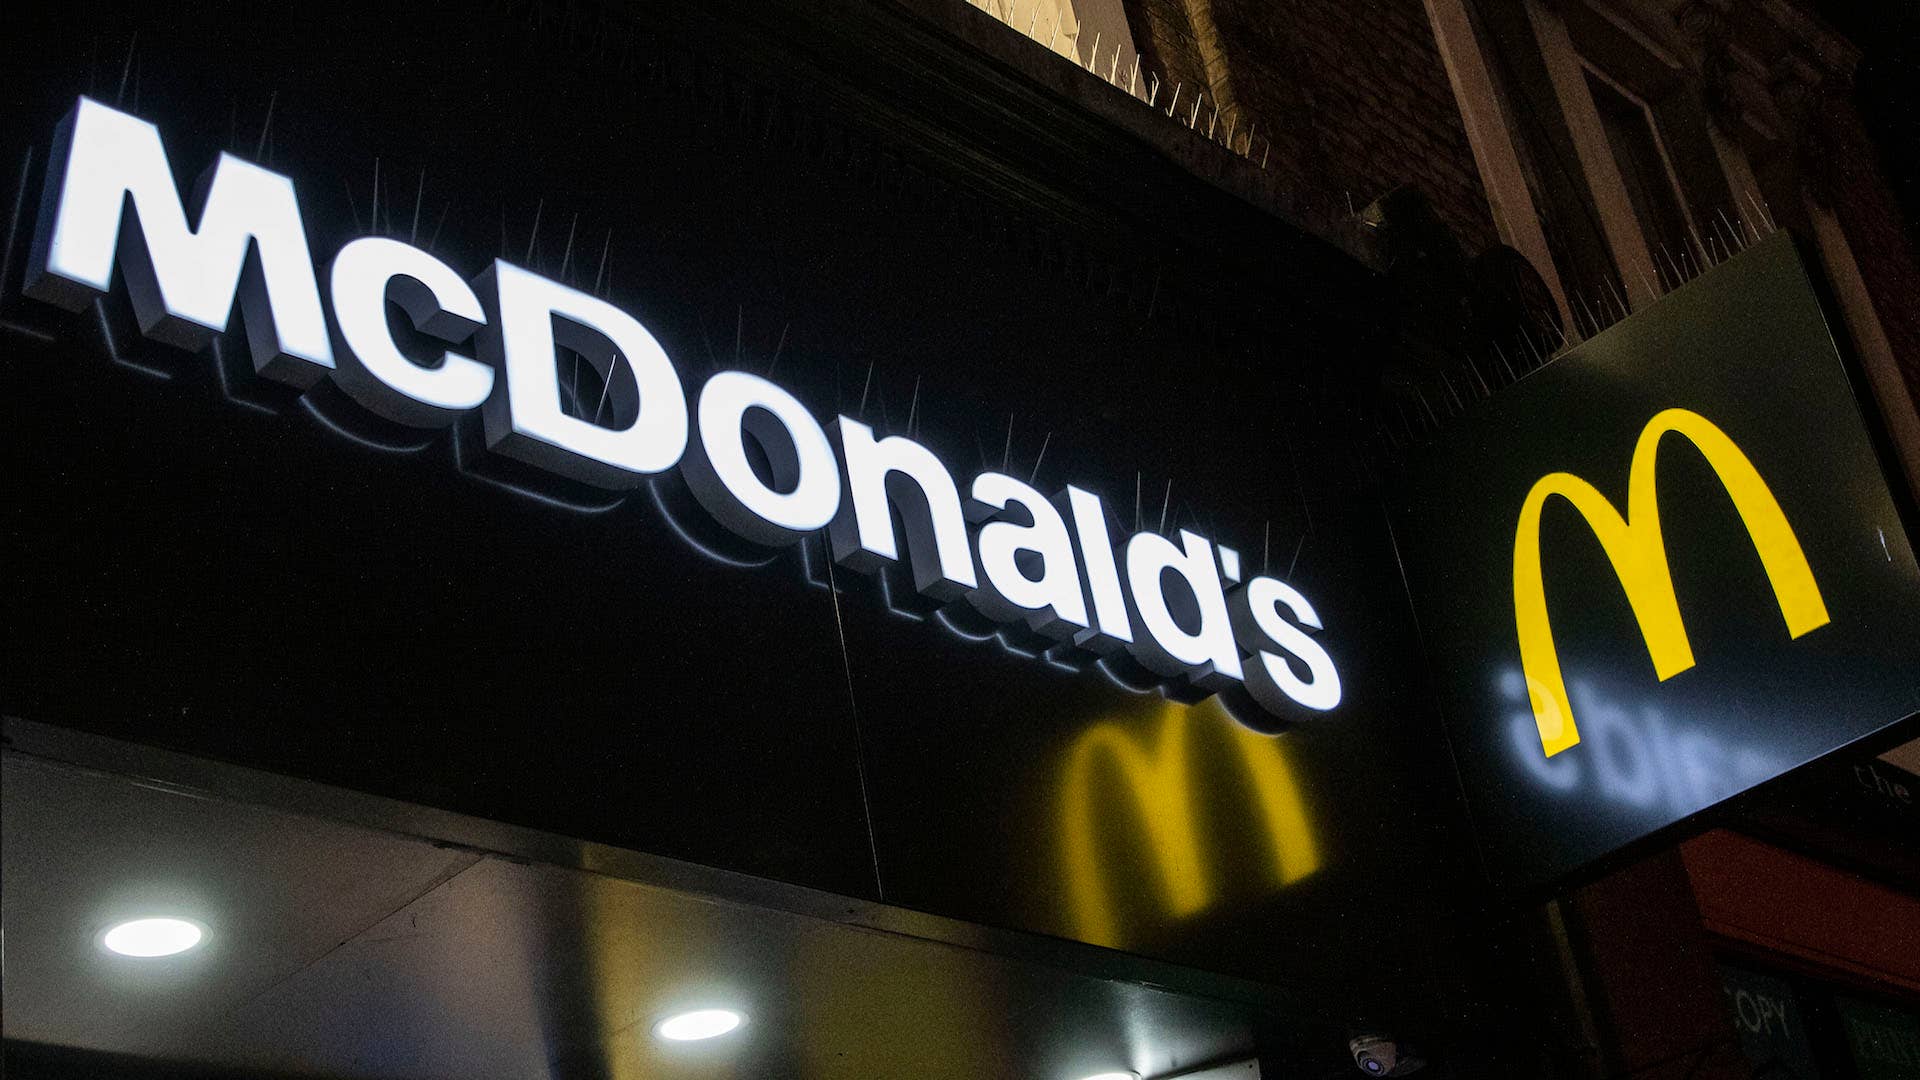 The McDonalds logo seen at night